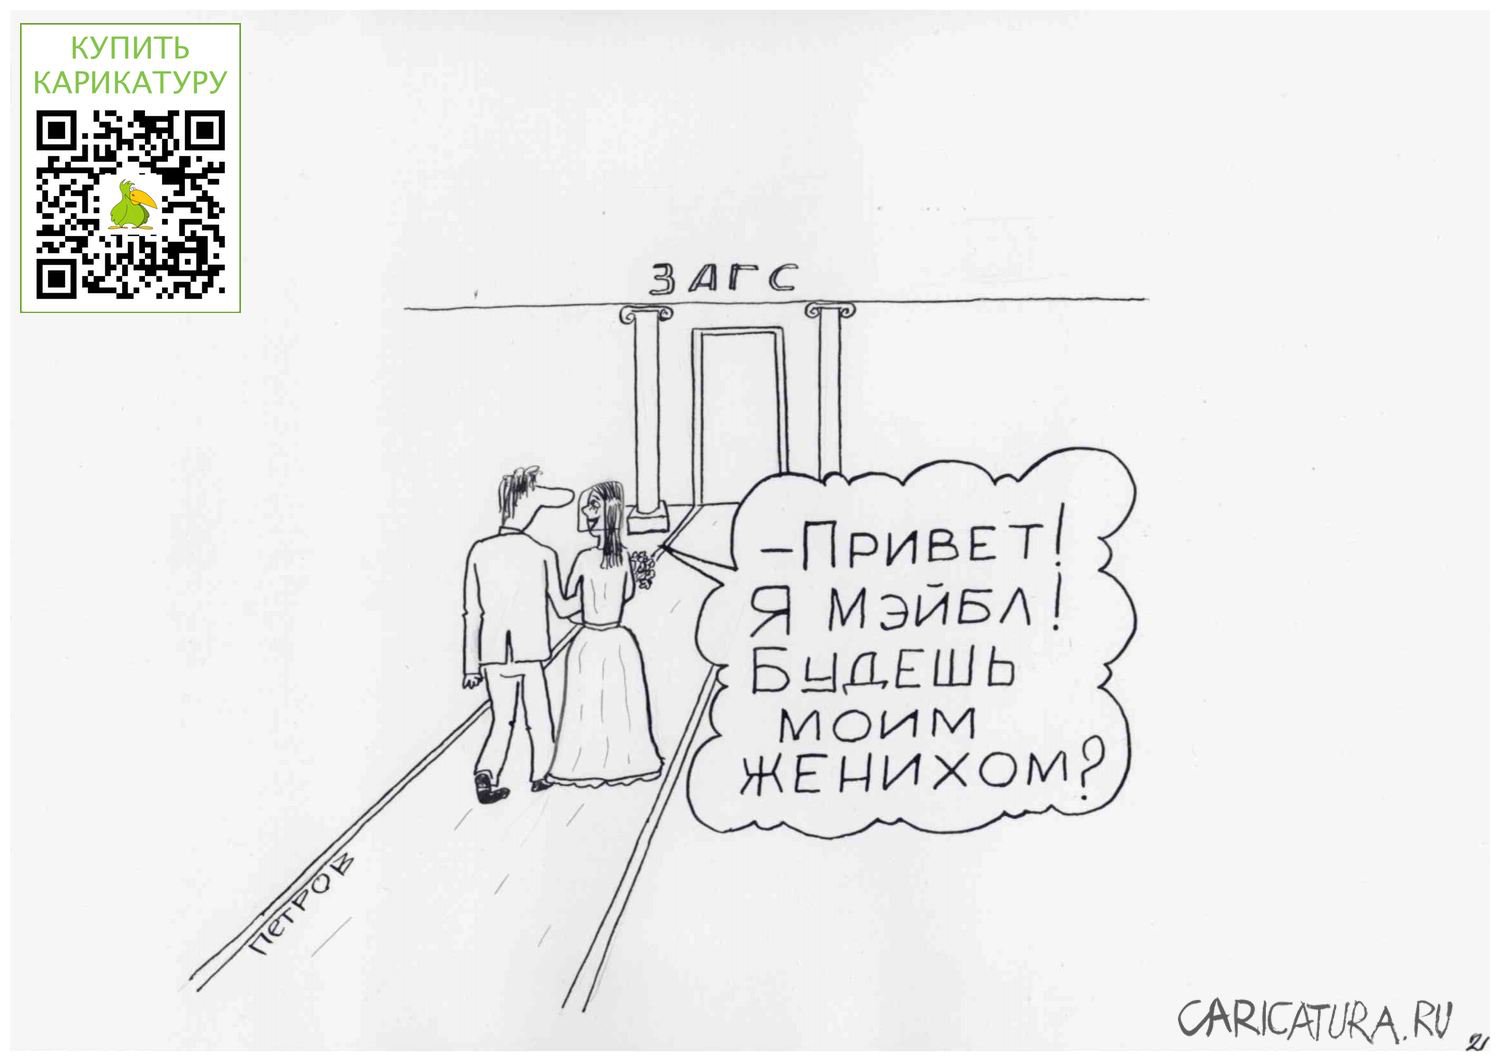 Карикатура "Жених и невеста", Александр Петров